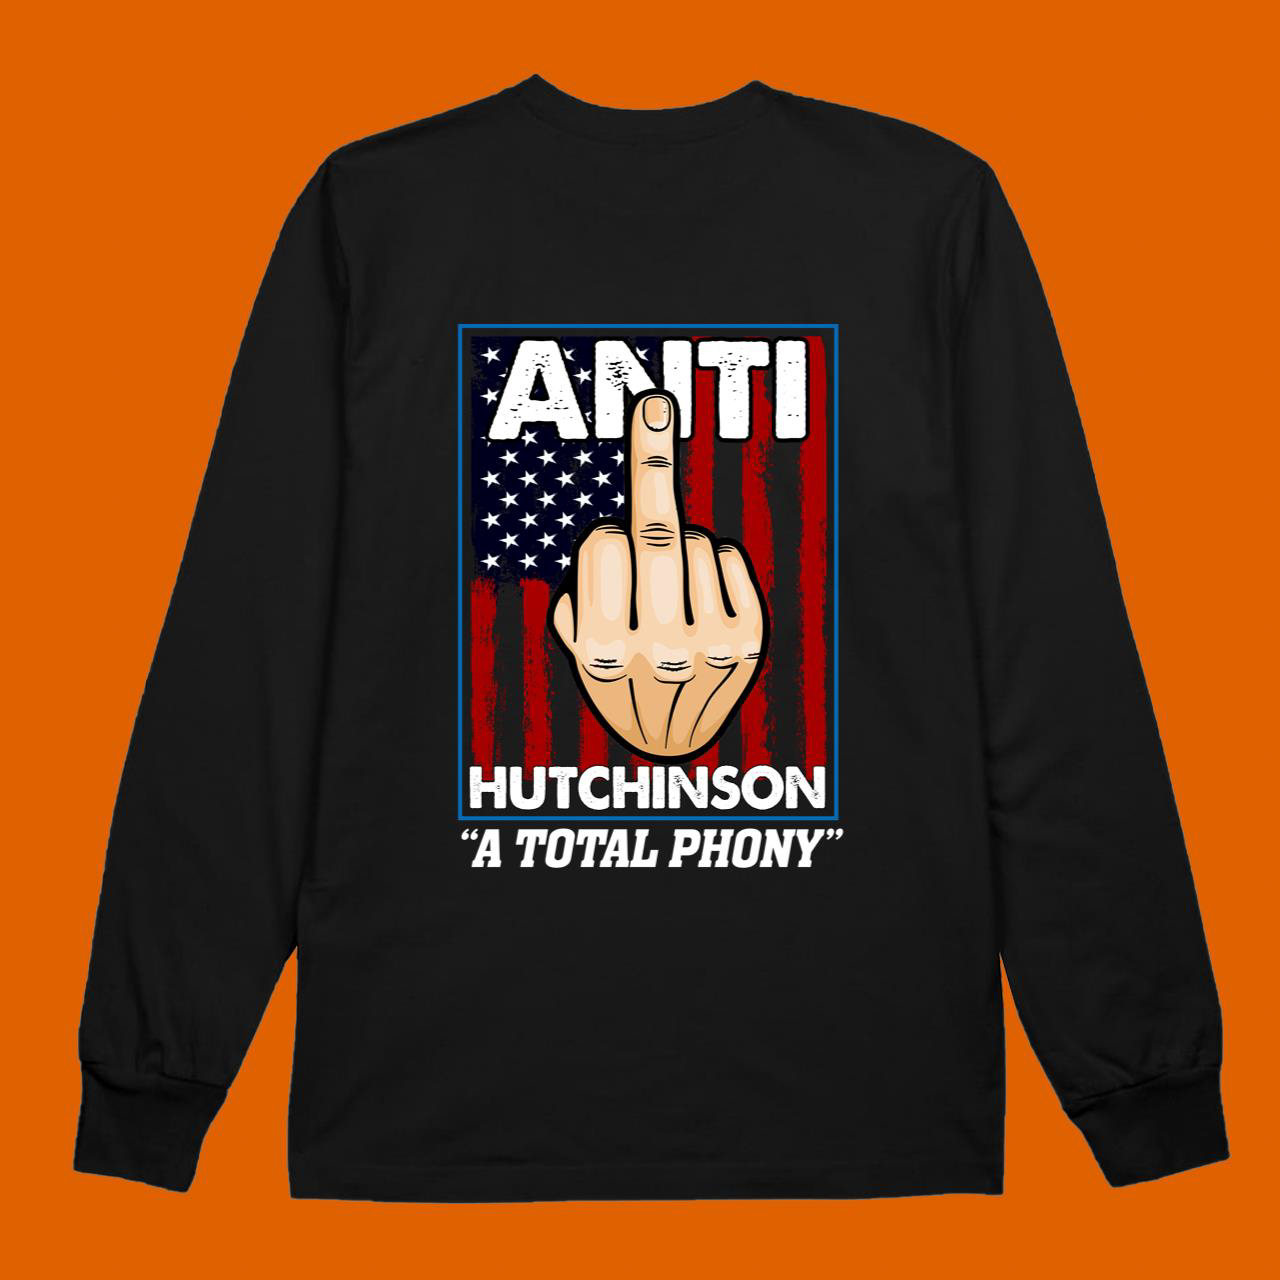 Anti Hutchinson Shirts